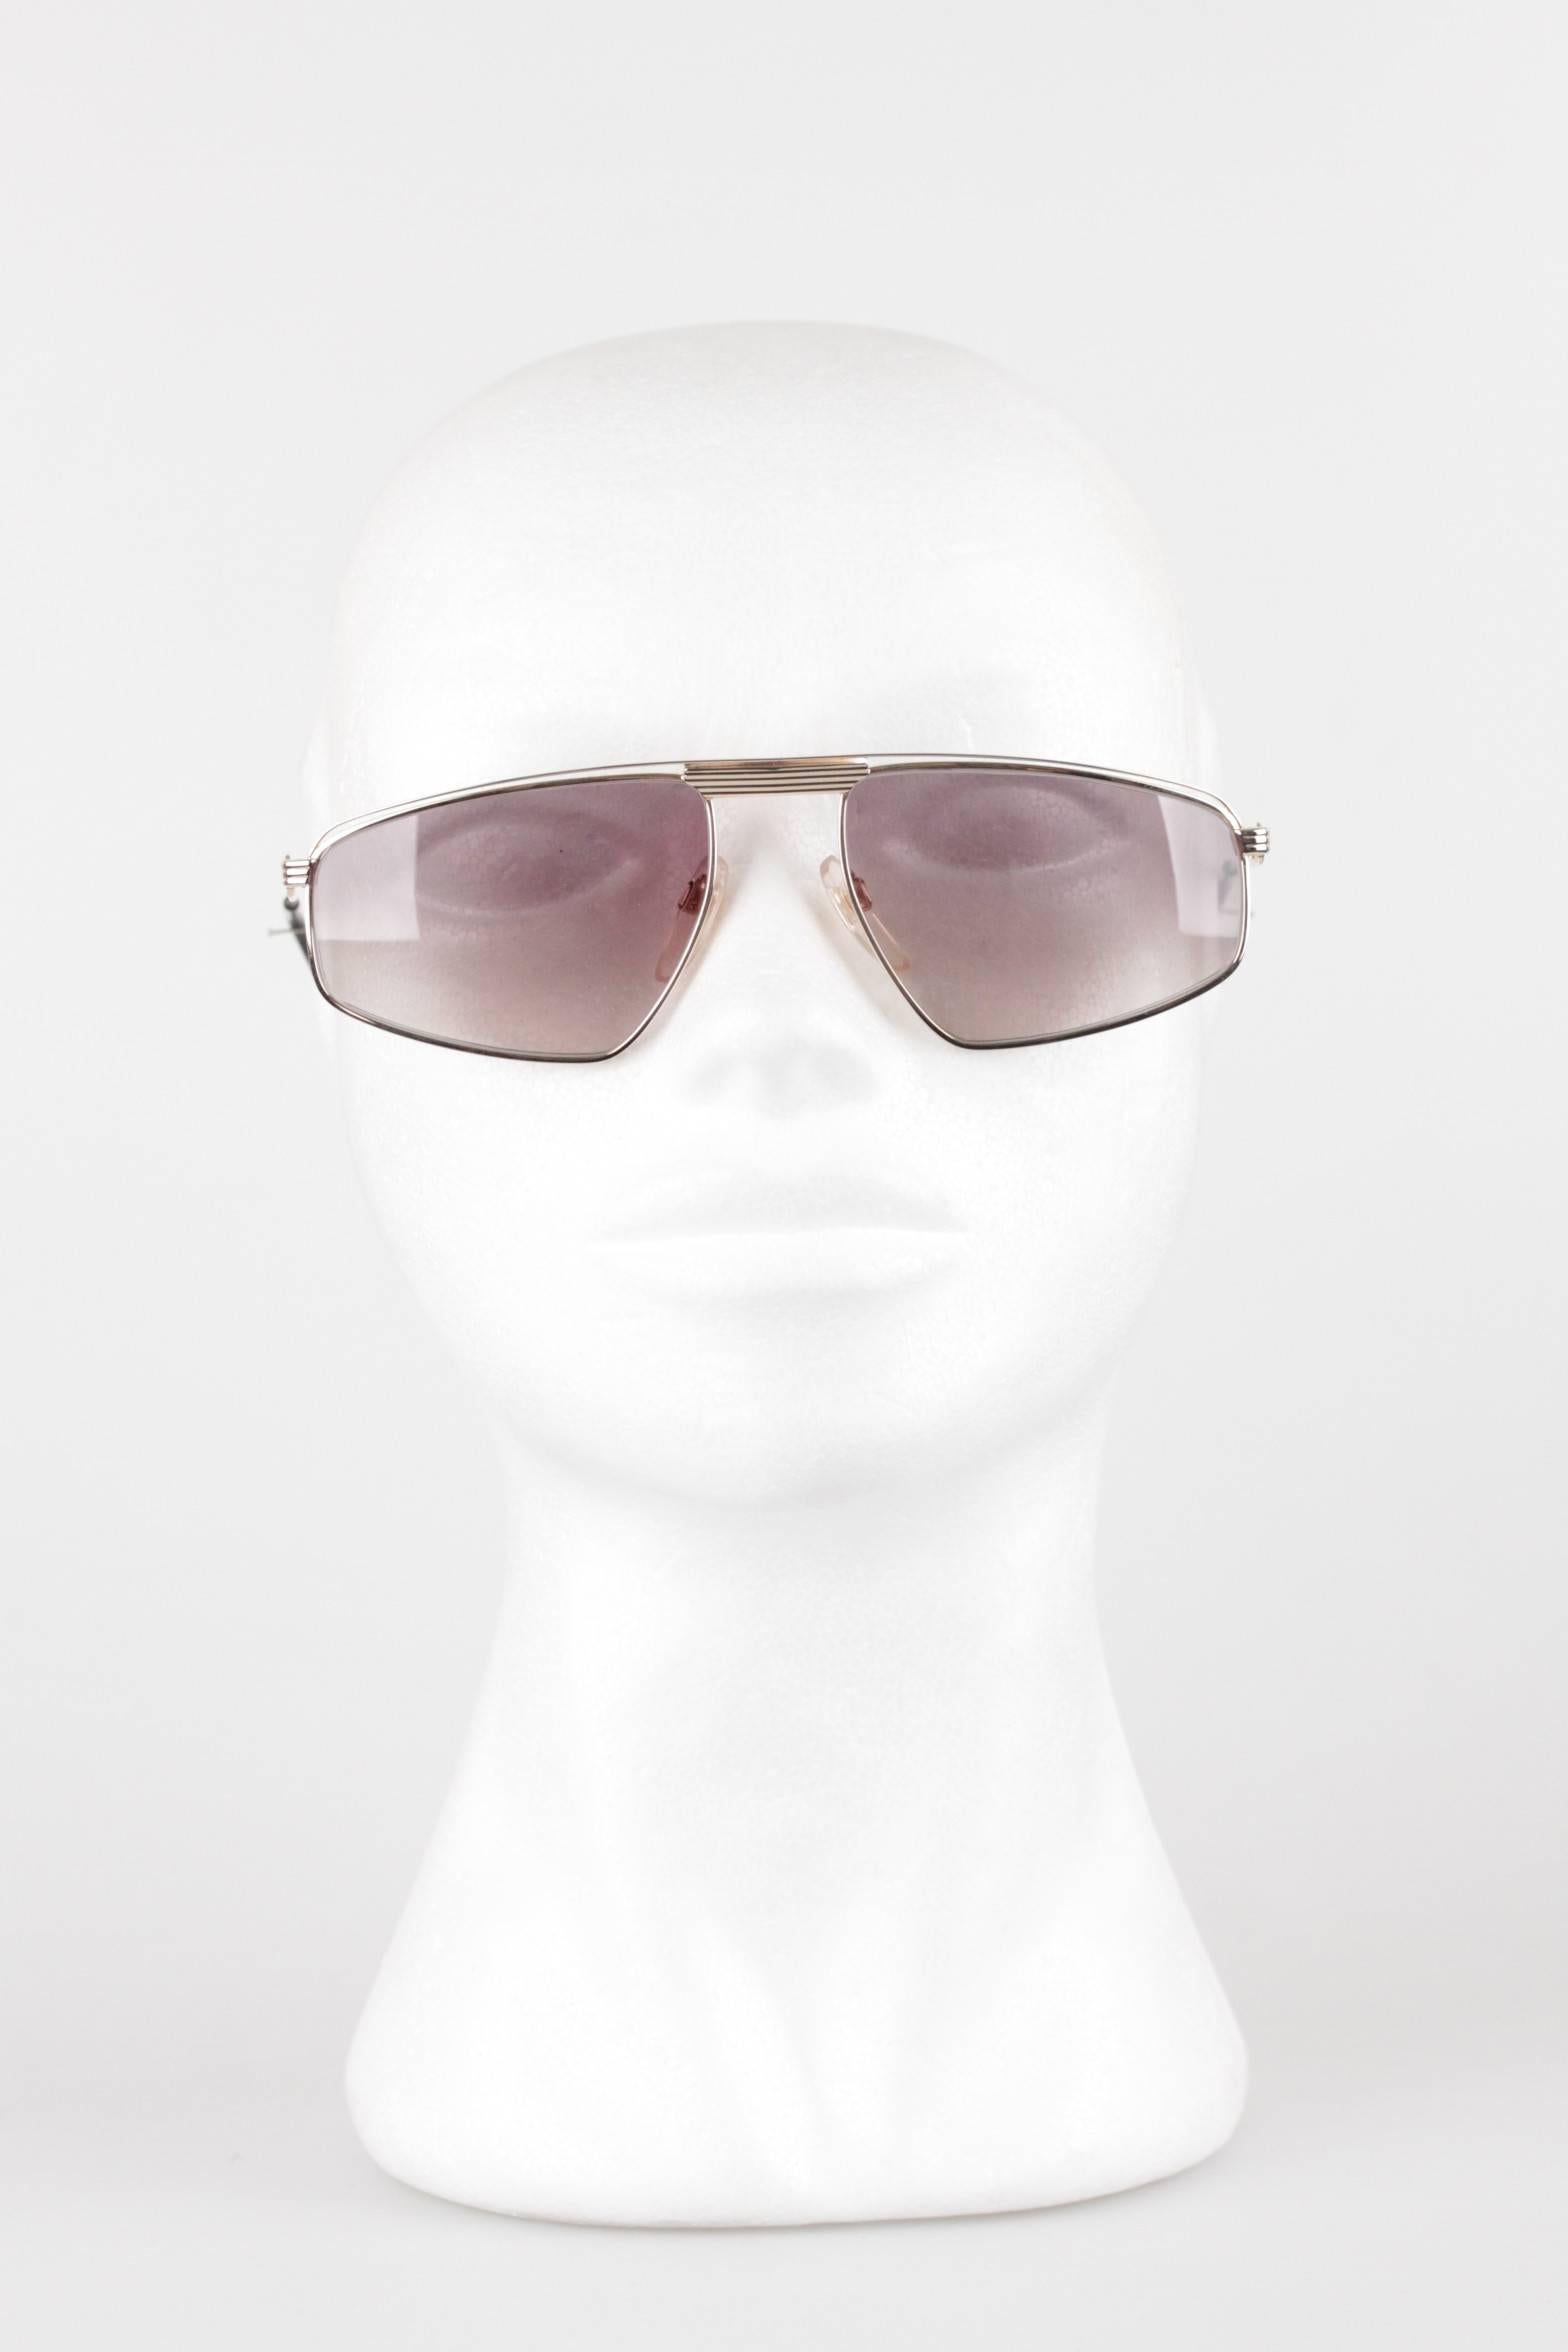 YVES SAINT LAURENT Vintage MINT UNSIEX Sunglasses mod. ASTERIUS 60/18 5